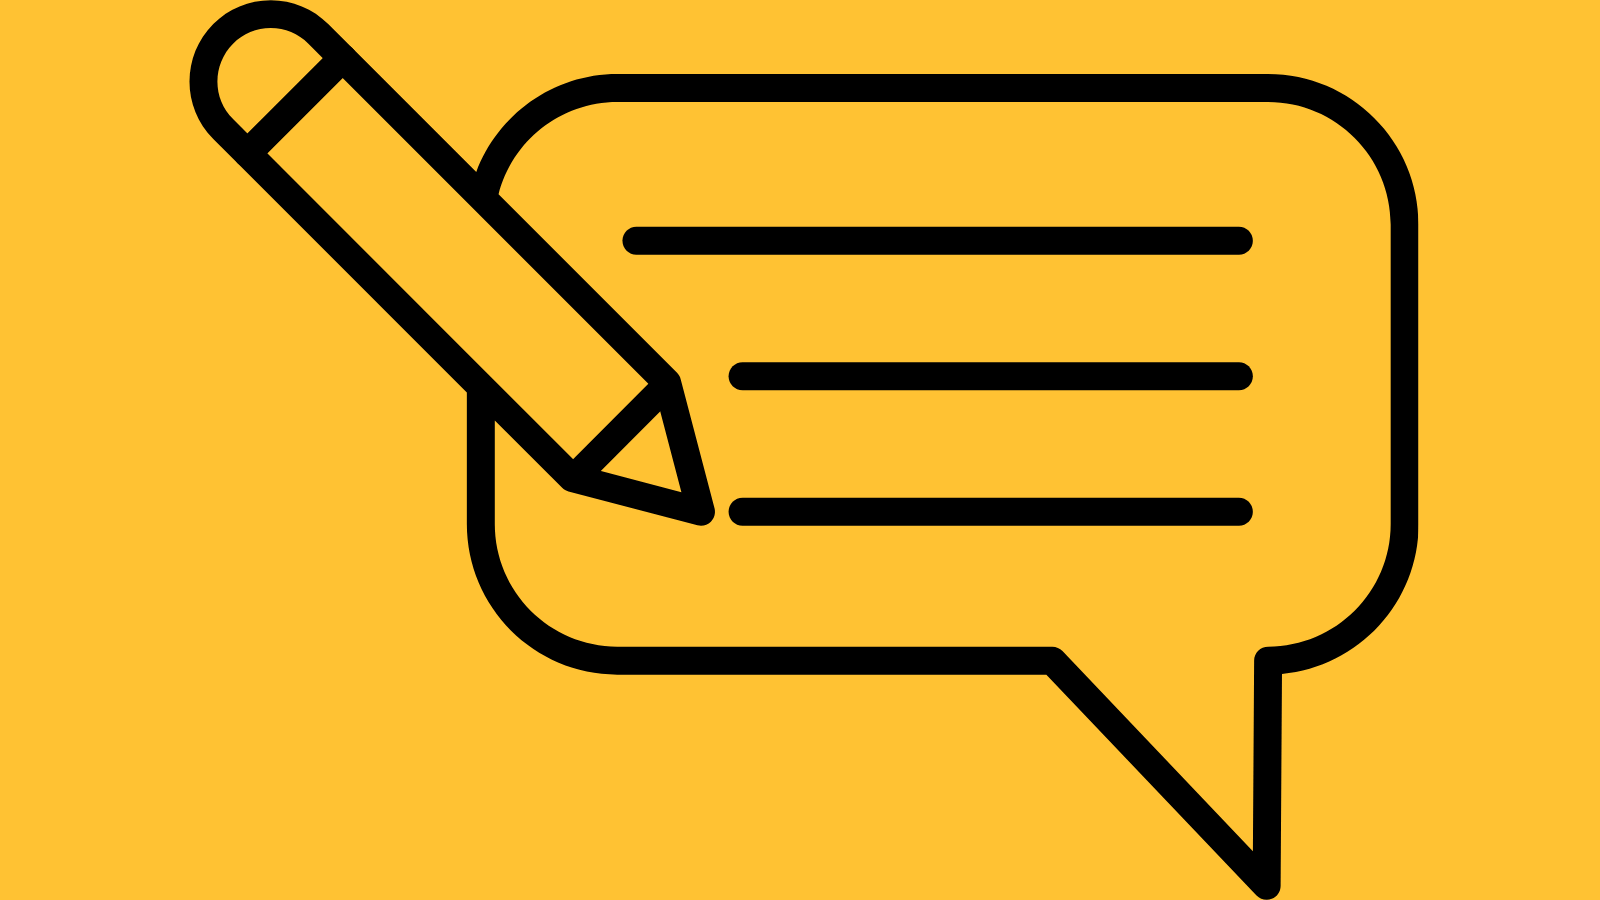 Icon of a pen writing in a speech bubble